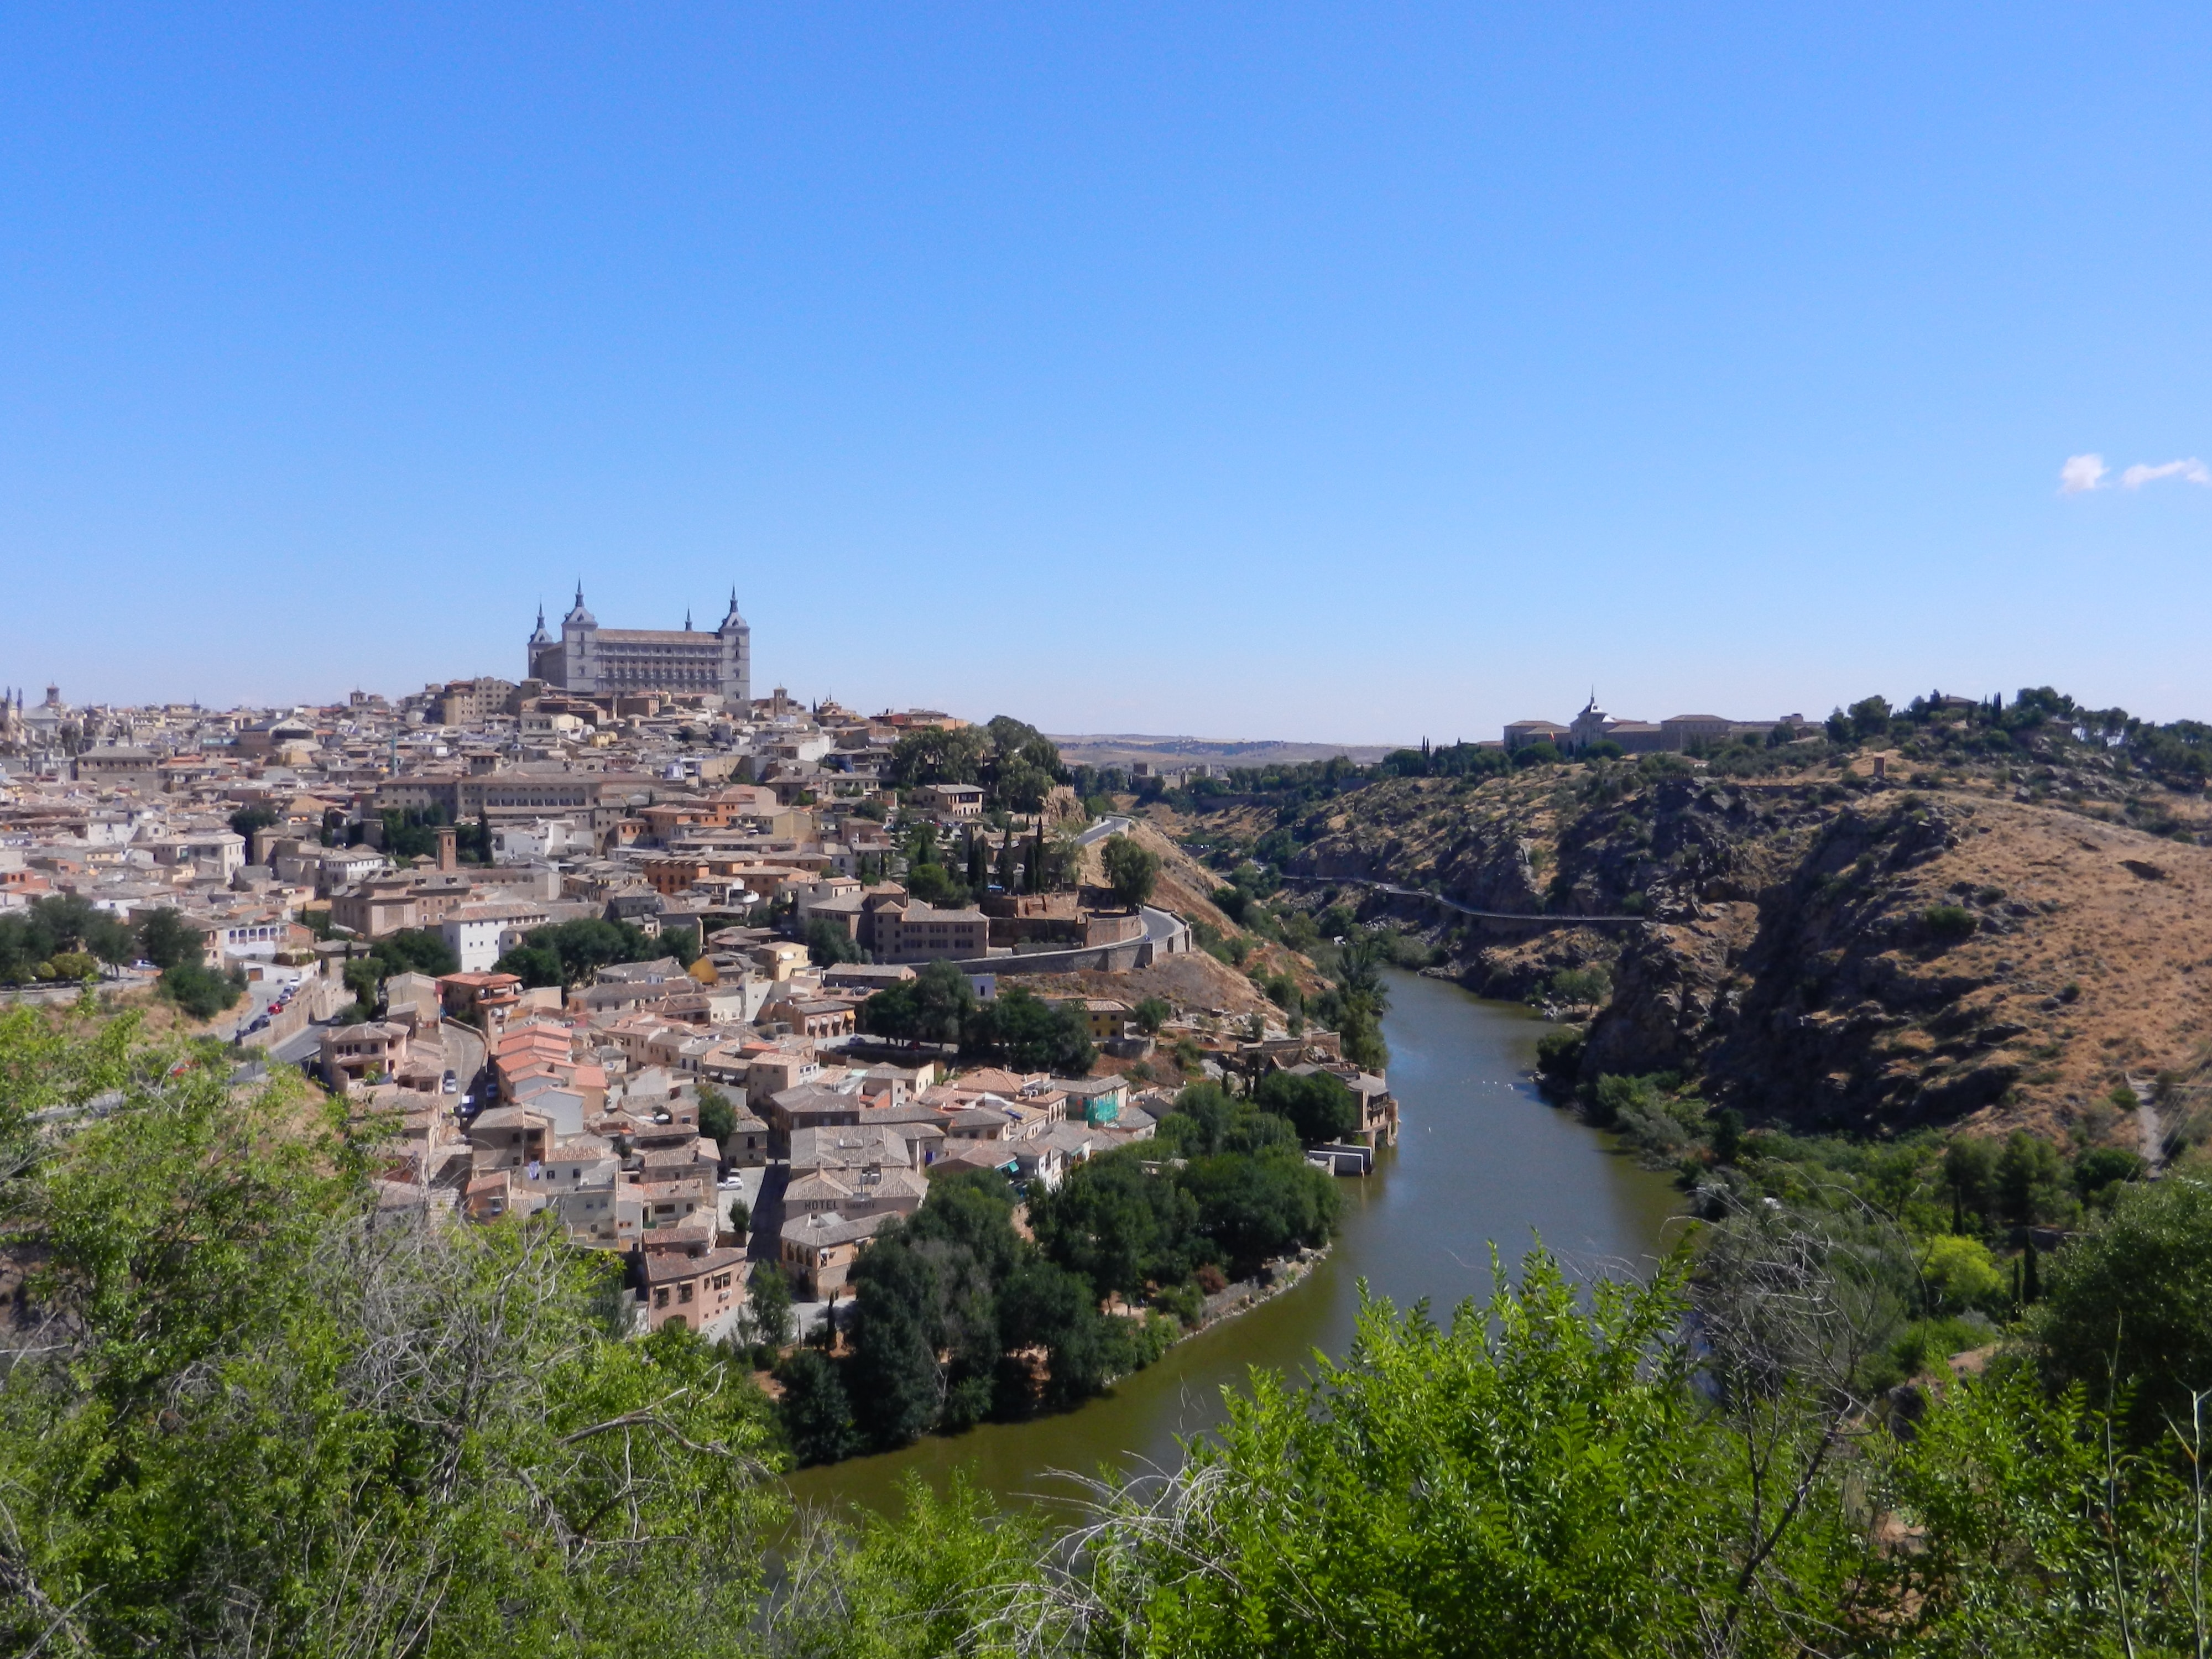 The historical city of Toledo